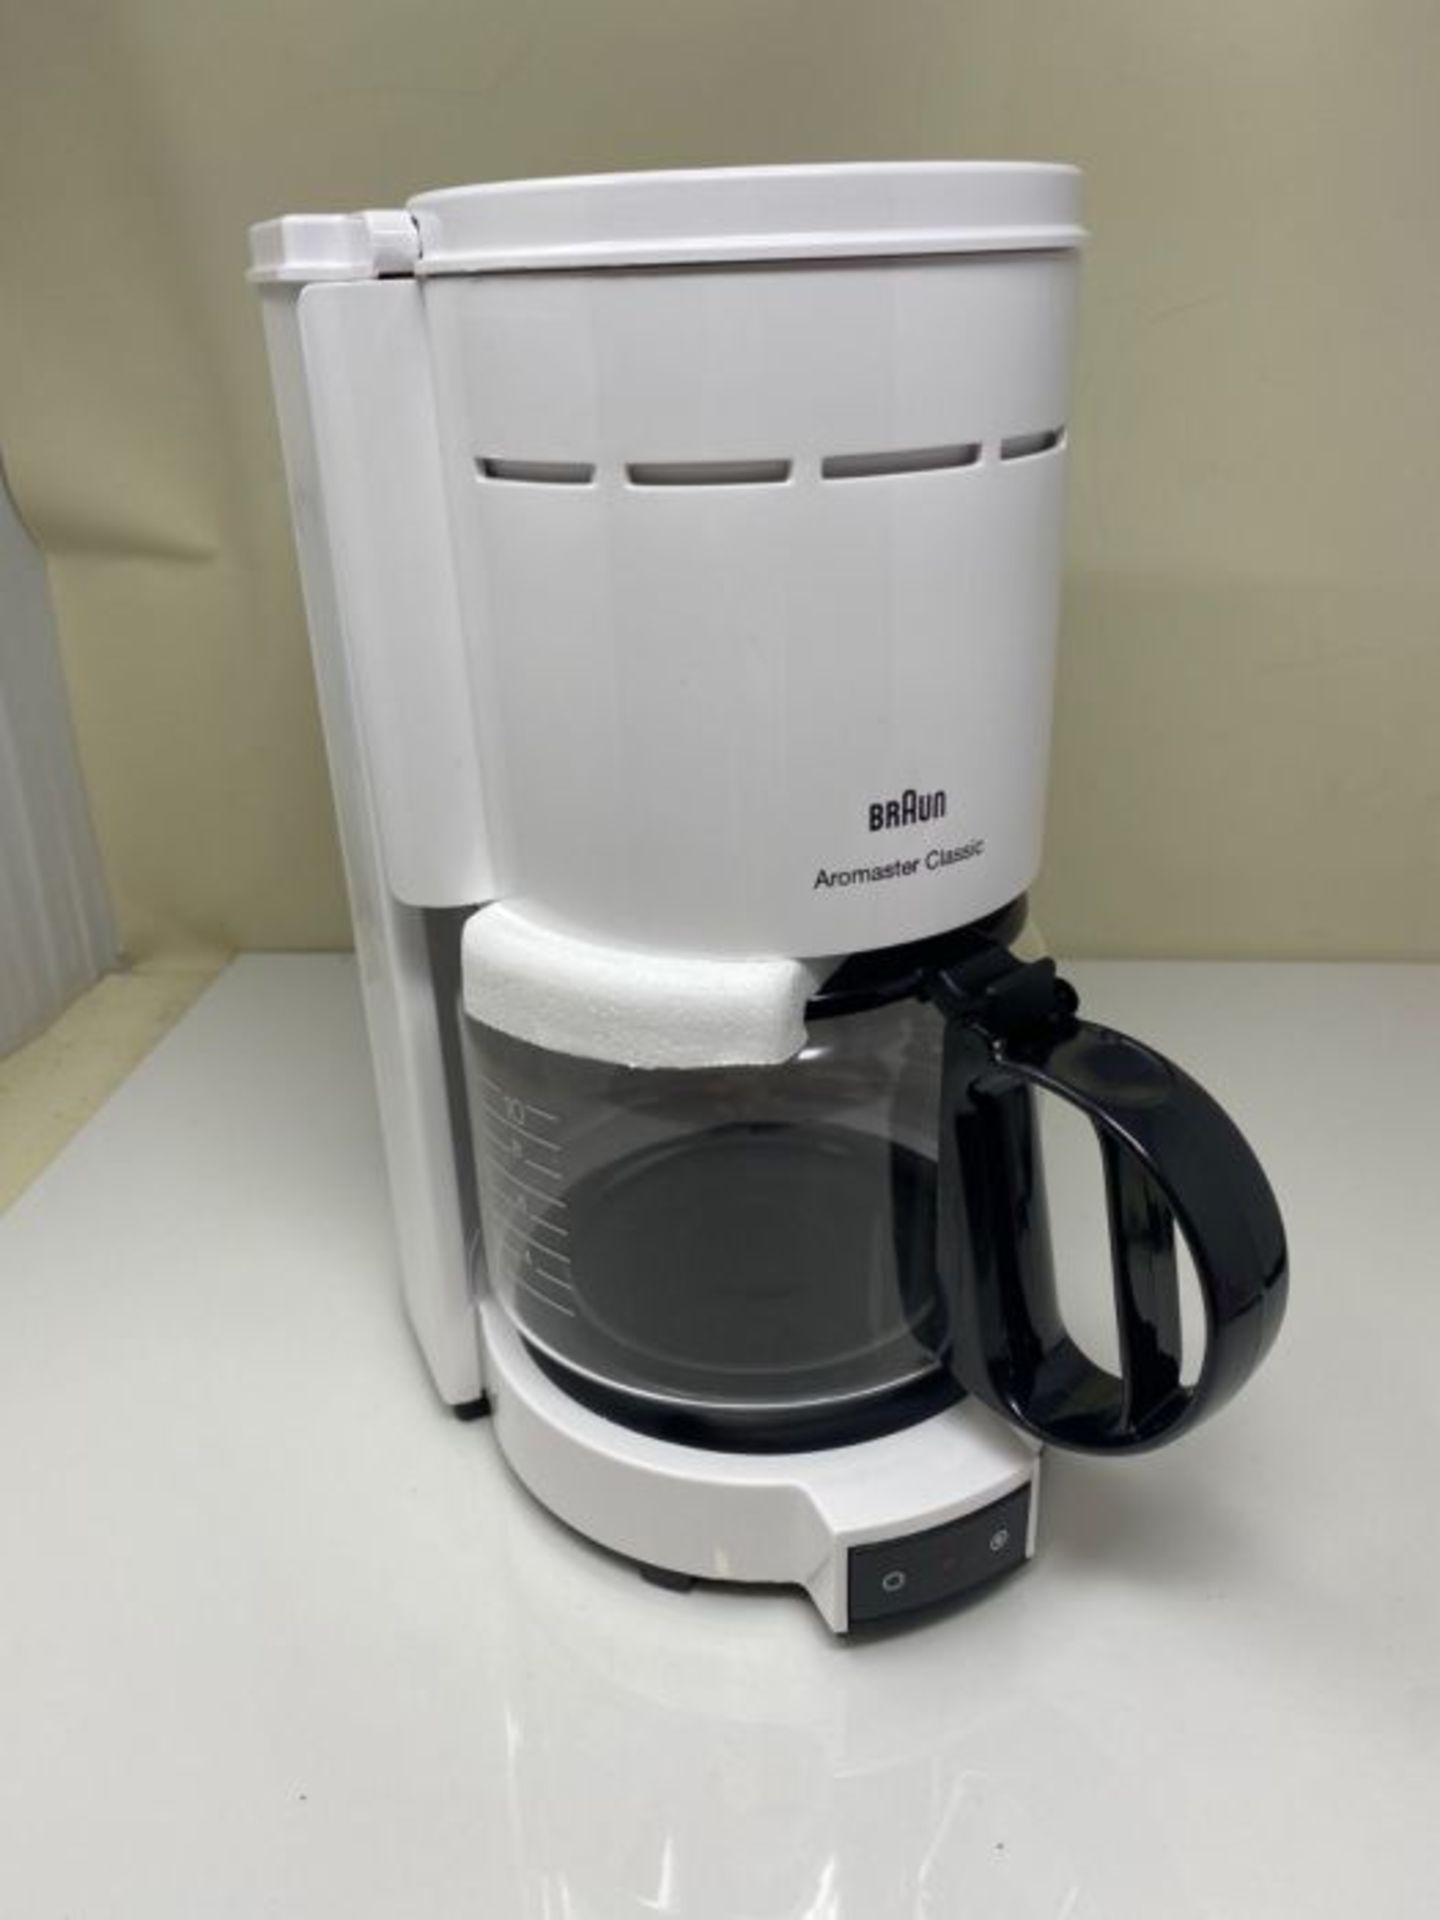 Braun KF47 WH Braun KF47 White 10-Cup Coffee Maker, 220V (Non-USA Compliant), White - Image 3 of 3